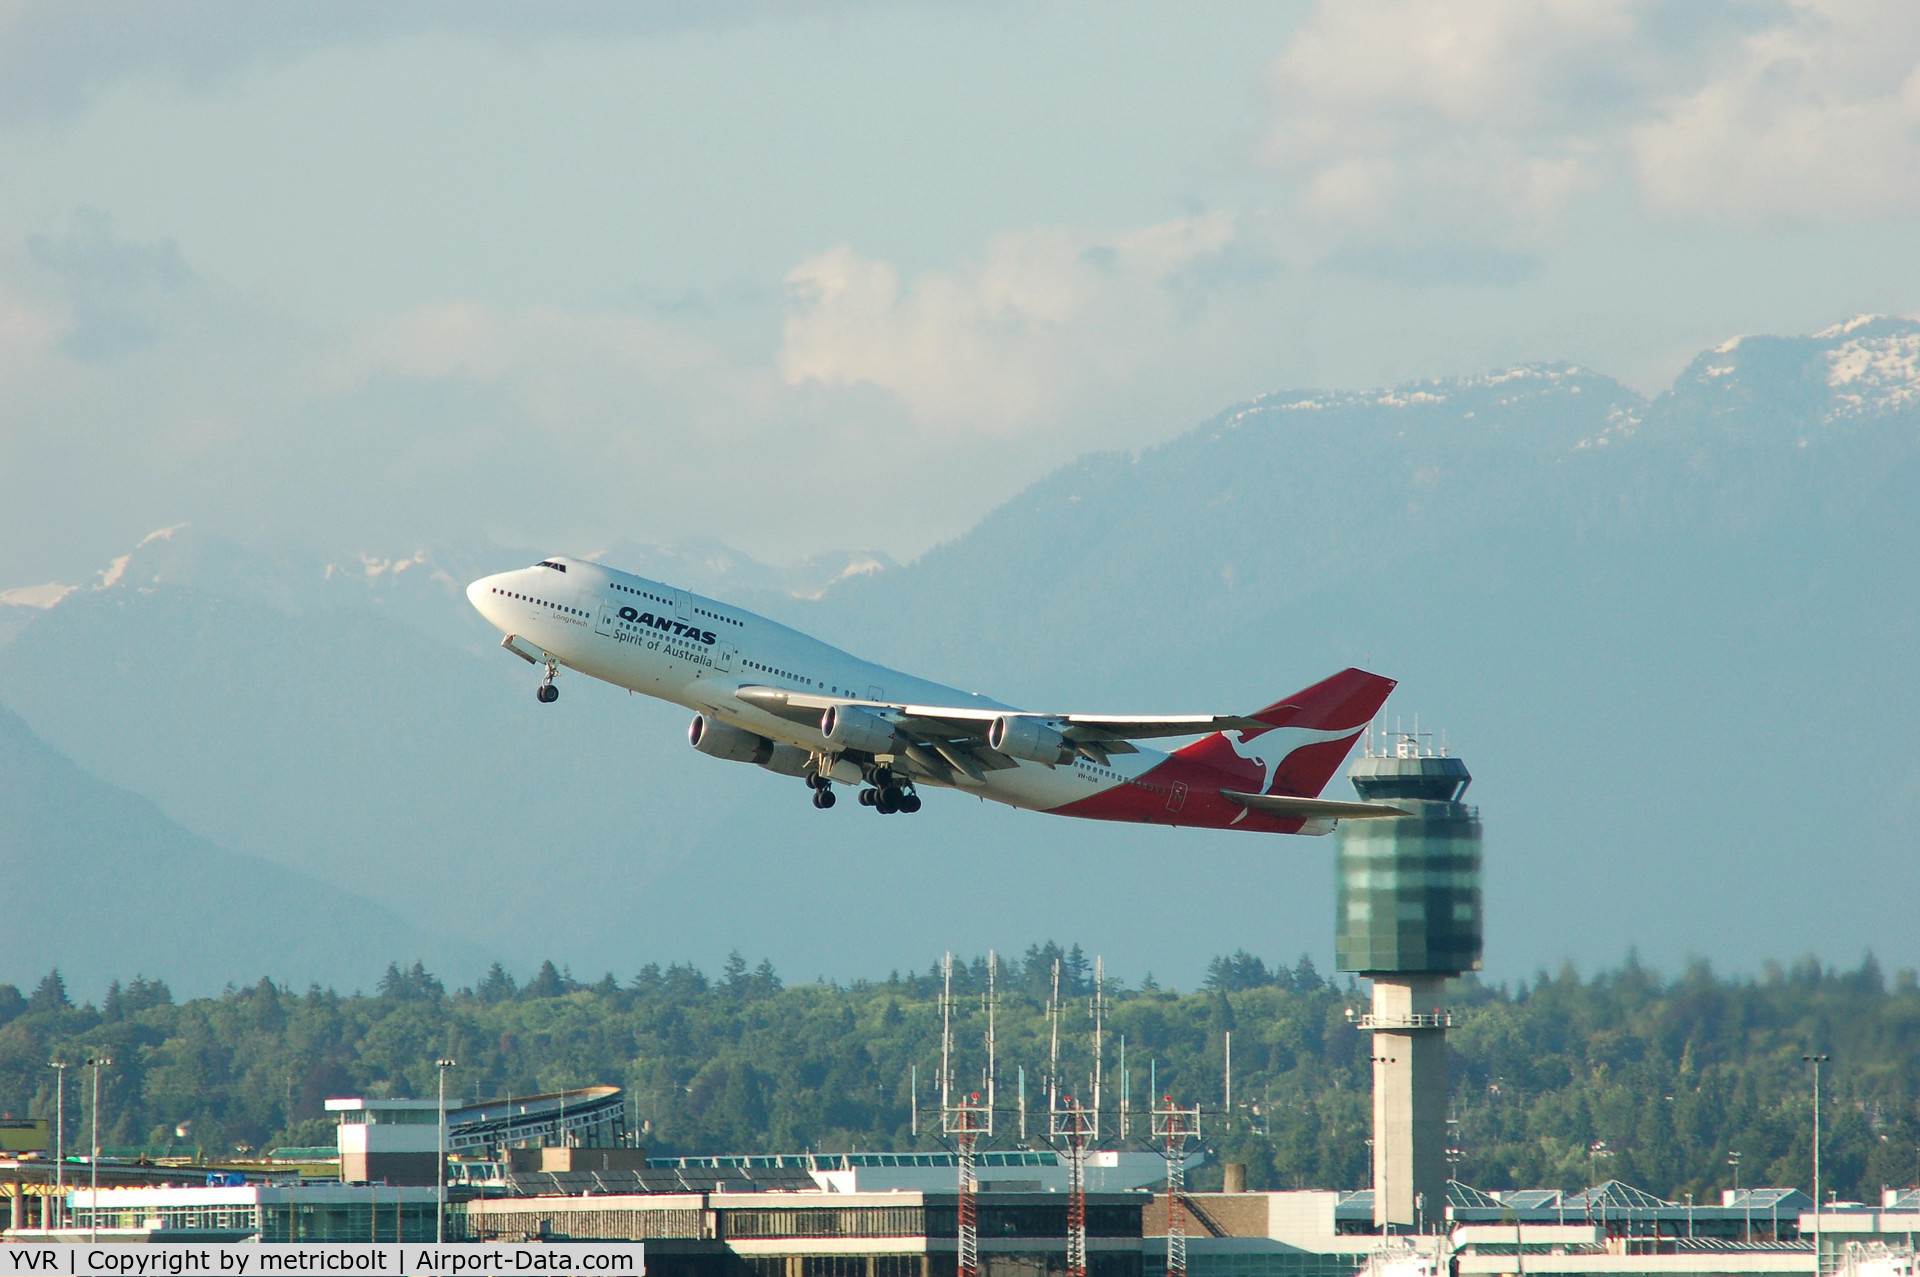 Vancouver International Airport, Vancouver, British Columbia Canada (YVR) - Qantas B747 to SYD via SFO,summer 2007